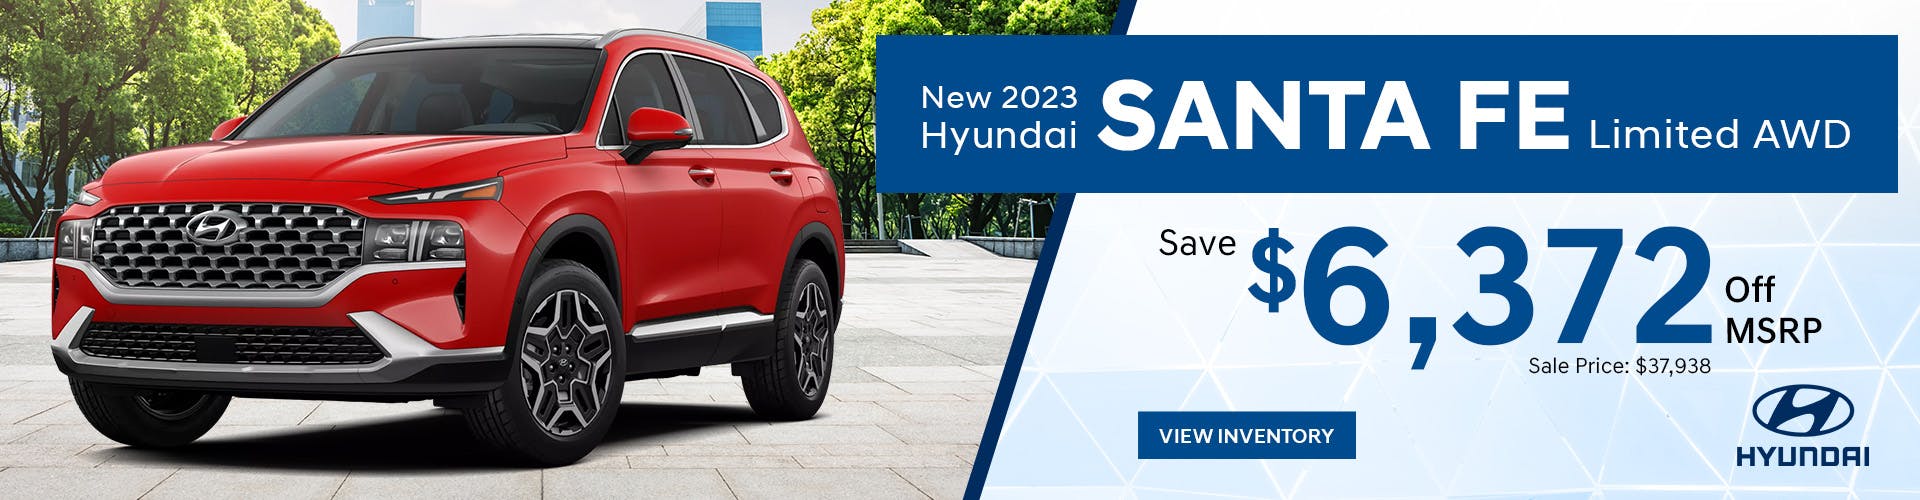 New 2023 Hyundai Santa Fe Limited AWD